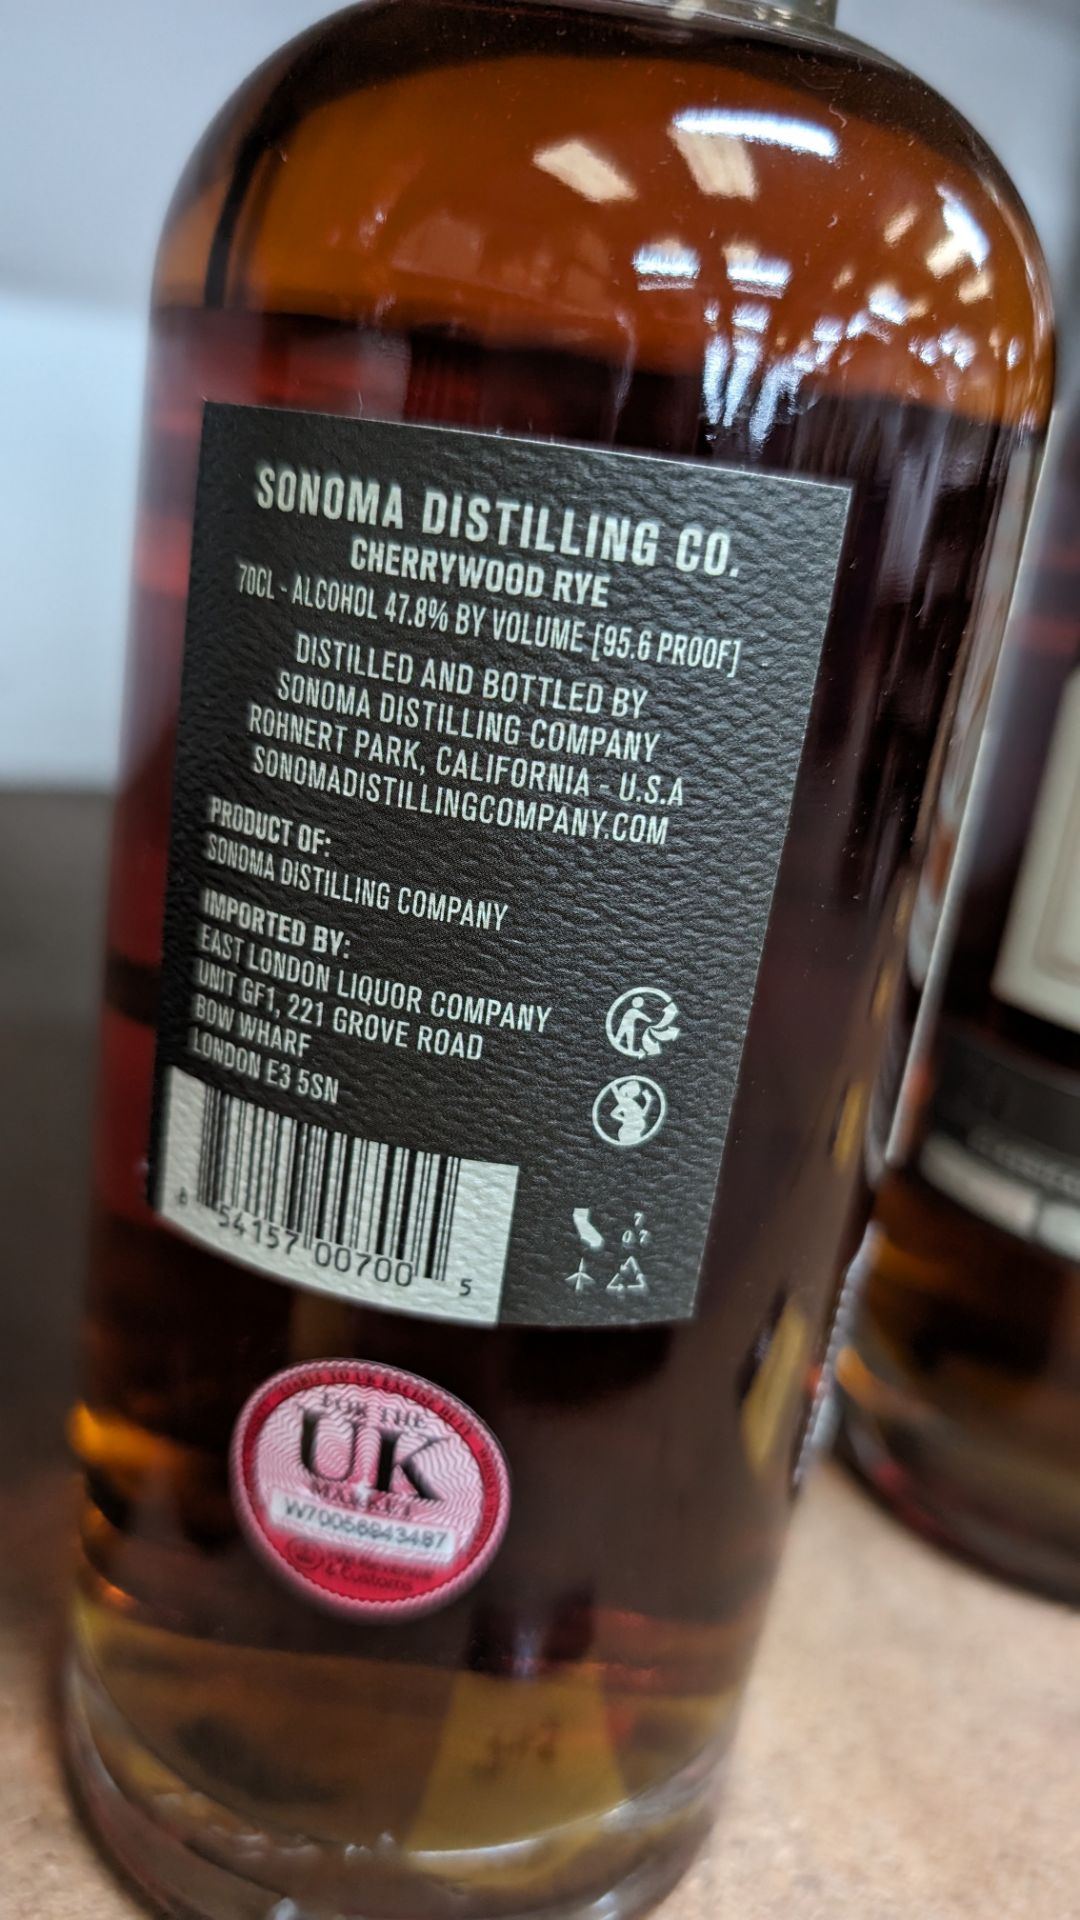 1 off 700ml bottle of Sonoma Cherrywood Rye Whiskey. 47.8% alc/vol (95.6 proof). Distilled and bot - Bild 4 aus 5